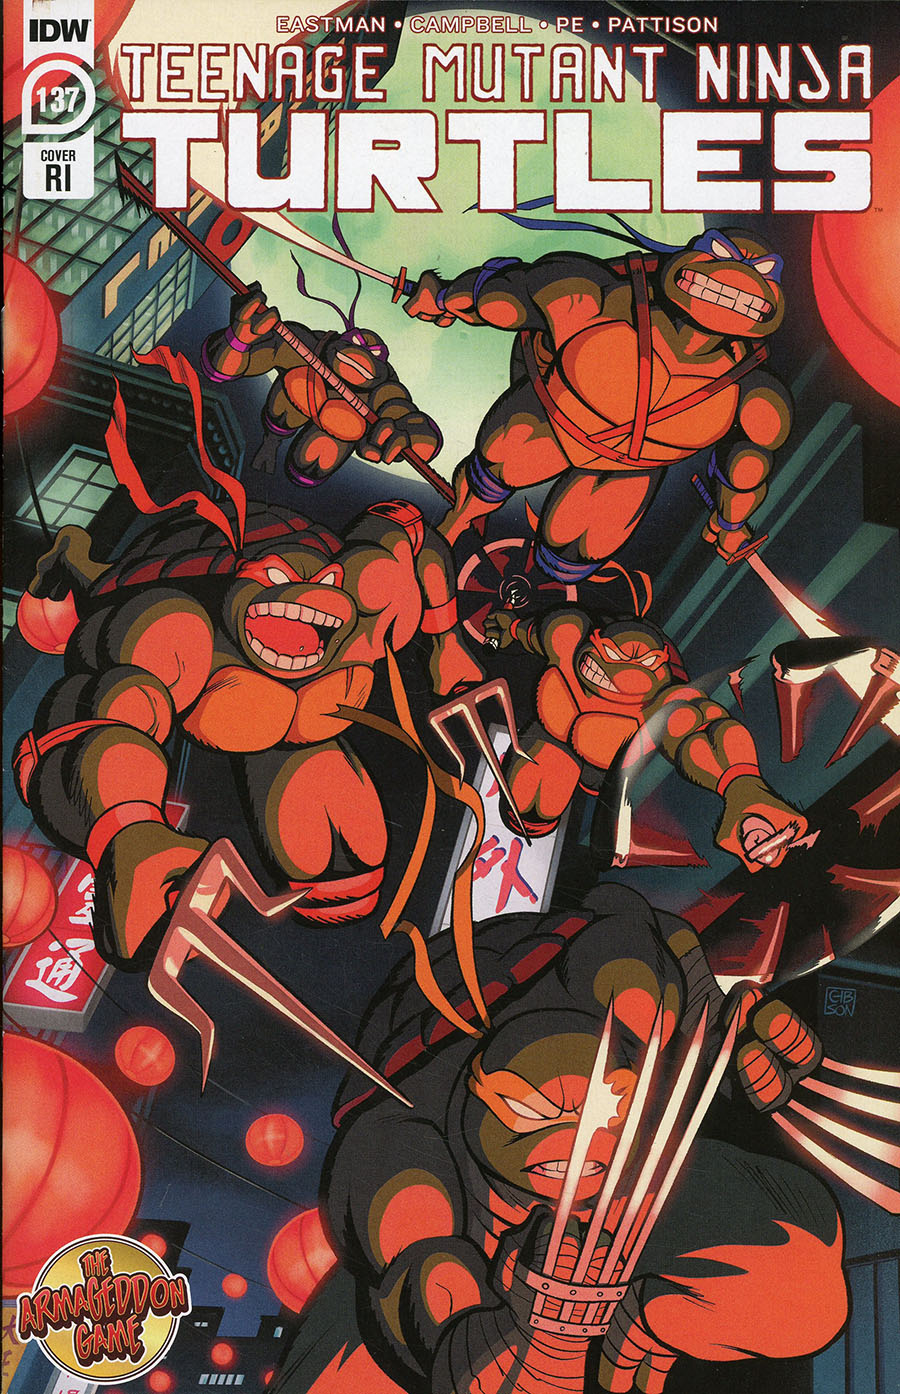 Teenage Mutant Ninja Turtles Vol 5 #137 Cover C Incentive Jordan Gibson Variant Cover